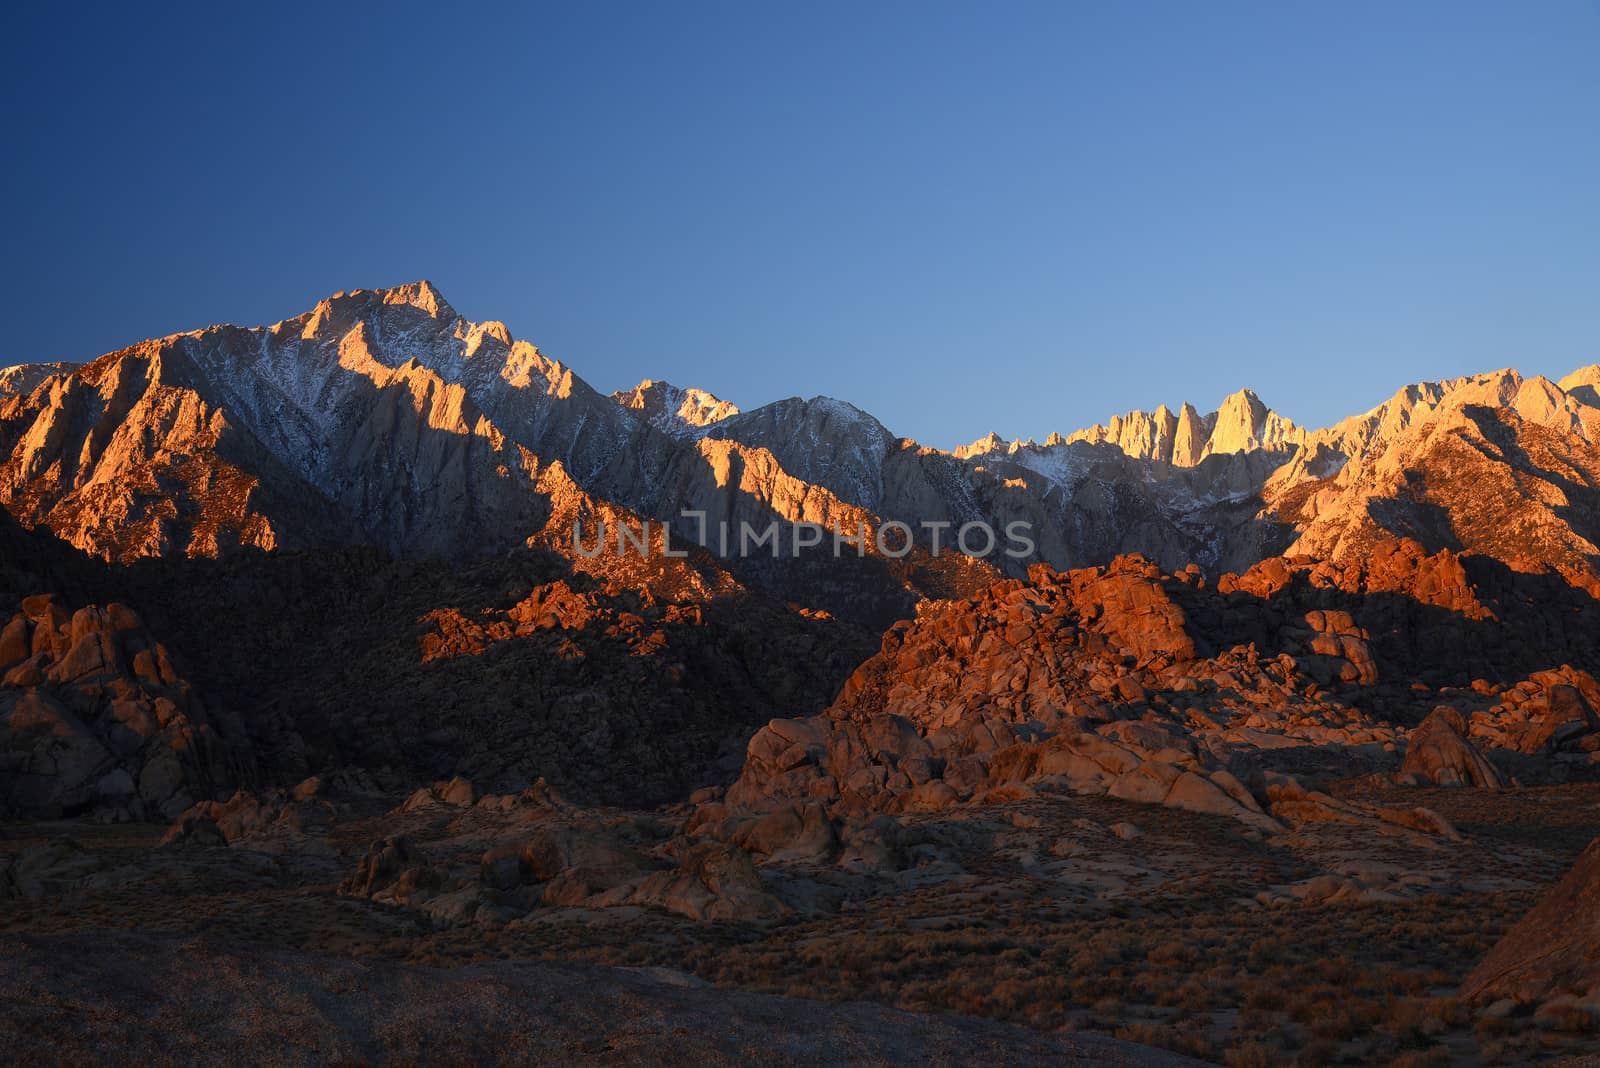 morning at california sierra mountain by porbital